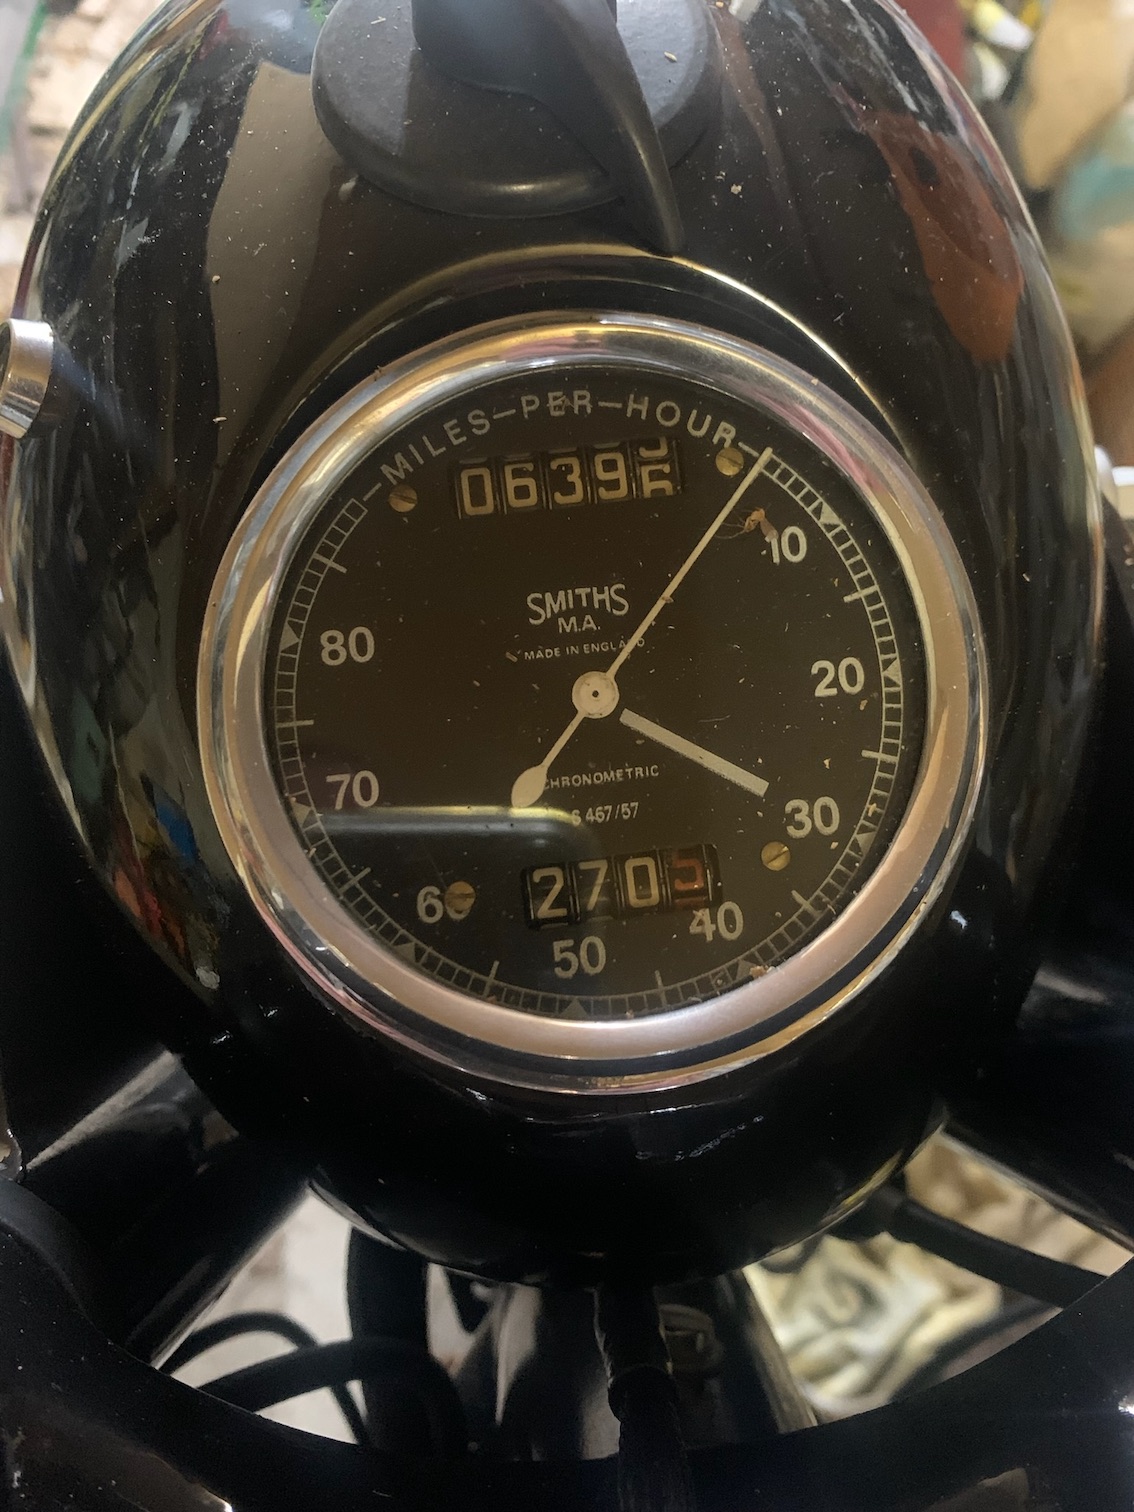 Chronometric speedometer type fitted to 1962 Norton model 50